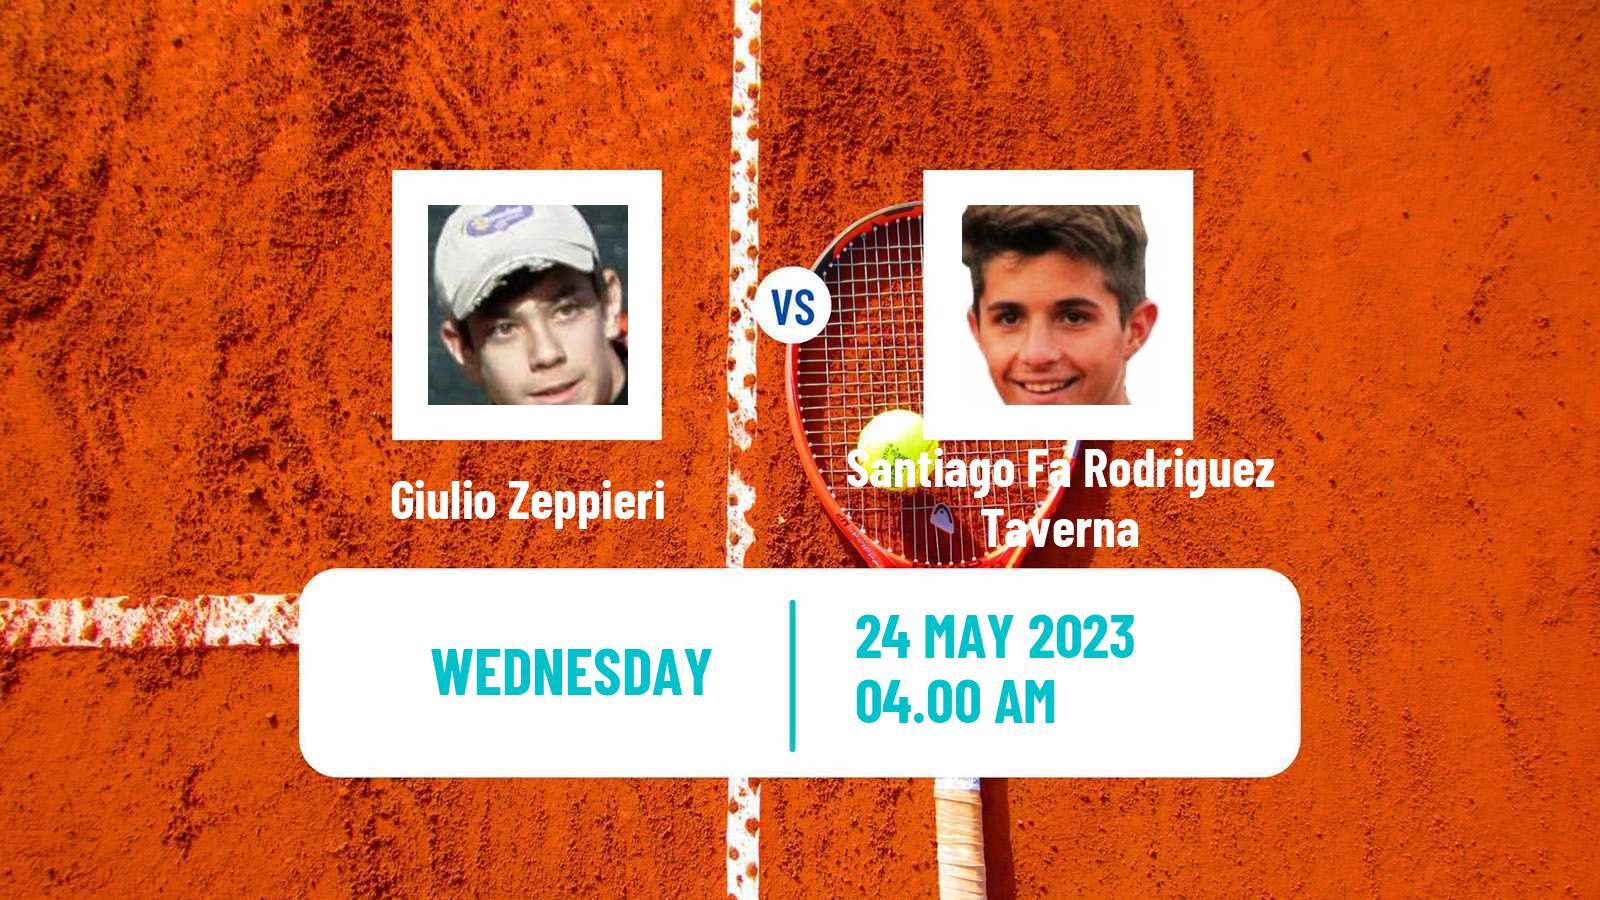 Tennis ATP Roland Garros Giulio Zeppieri - Santiago Fa Rodriguez Taverna